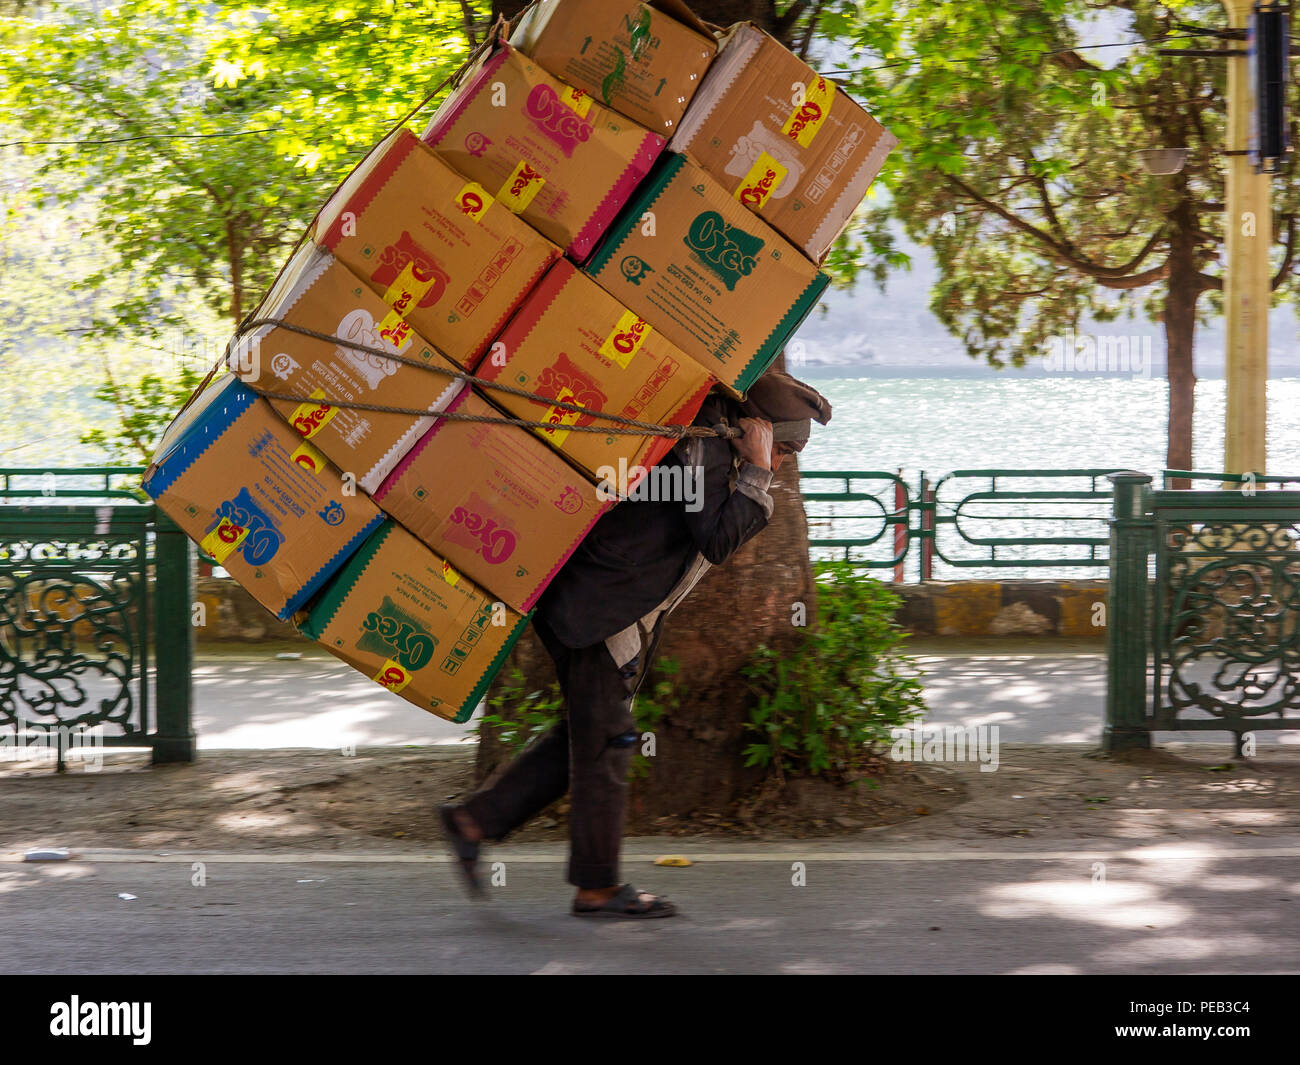 Indian man carring a pile of boxes in sherpa style near Nainital Lake, Nainital, Uttarakhand, India Stock Photo